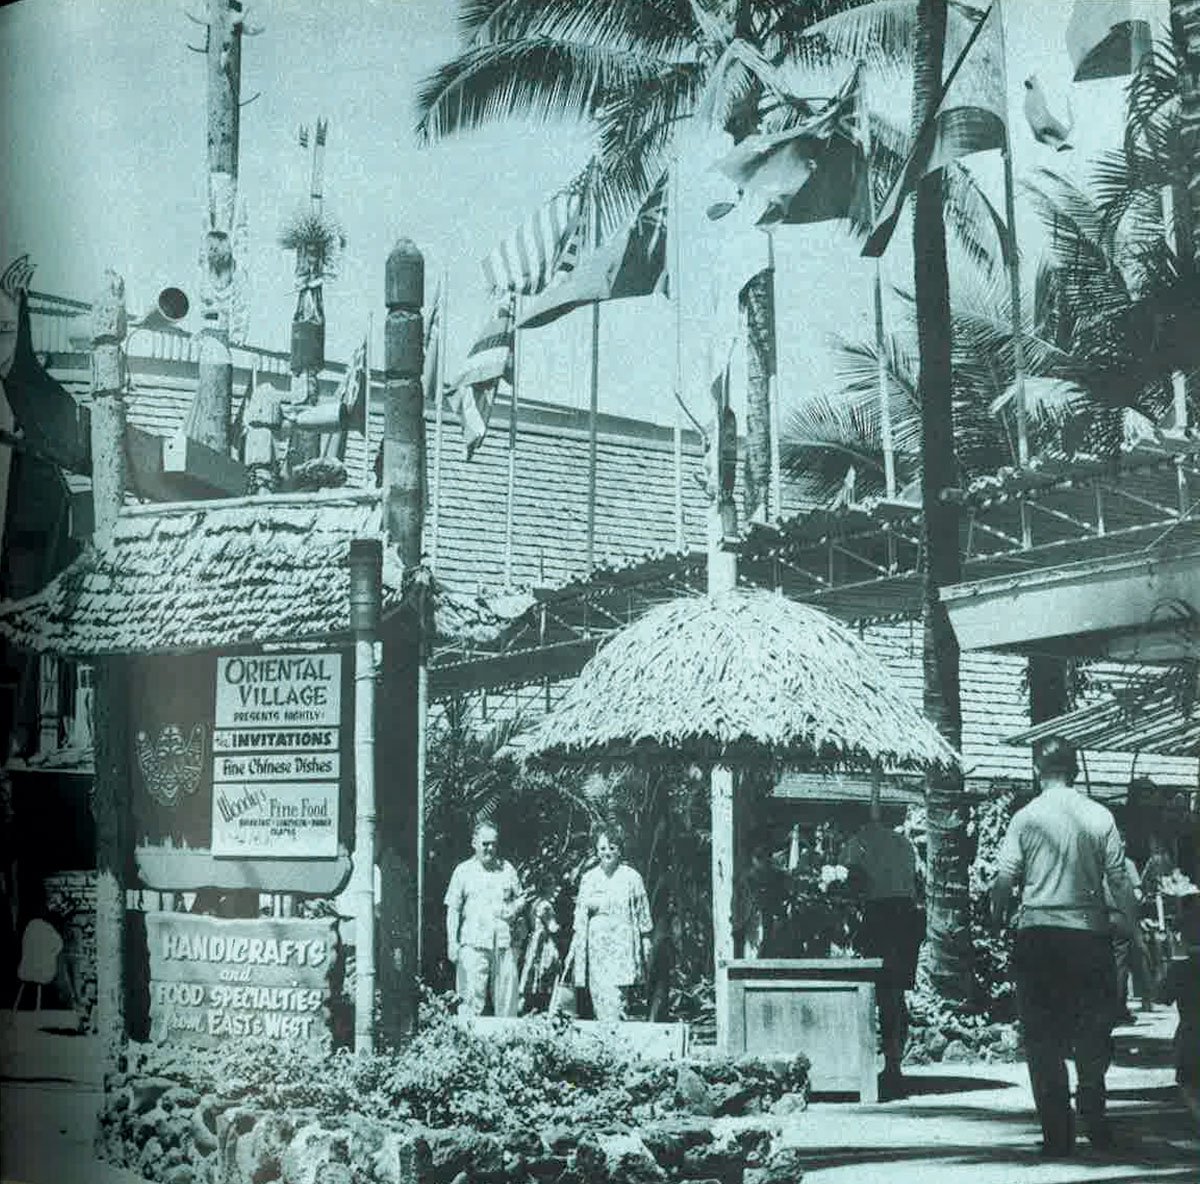 International Market Place in 1960